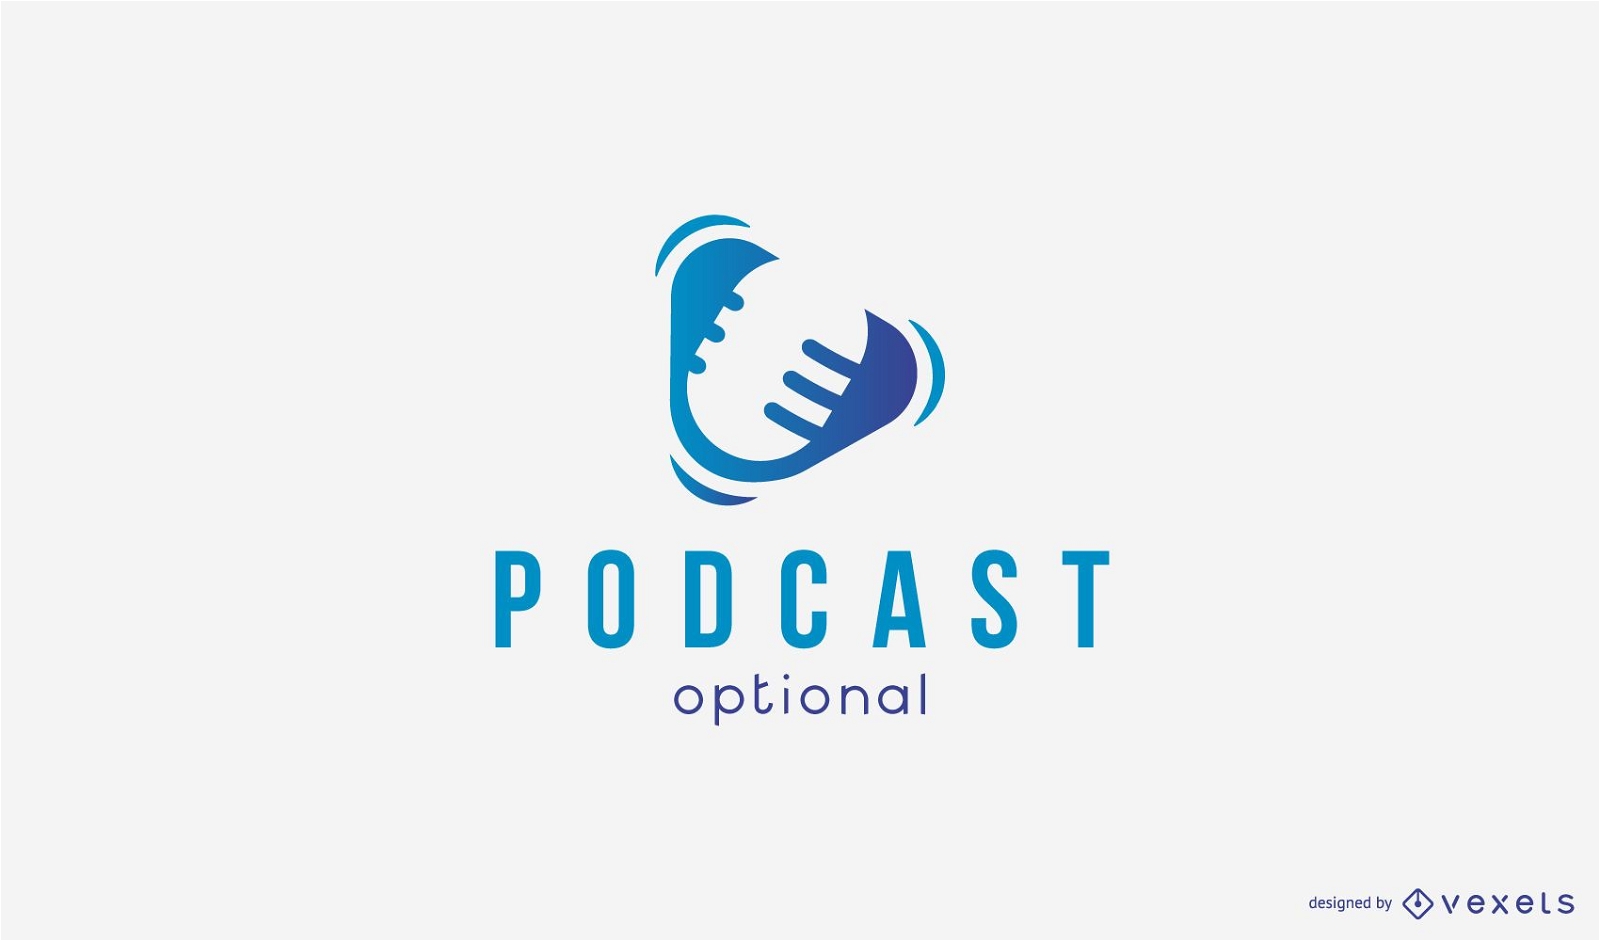 Podcast logo template